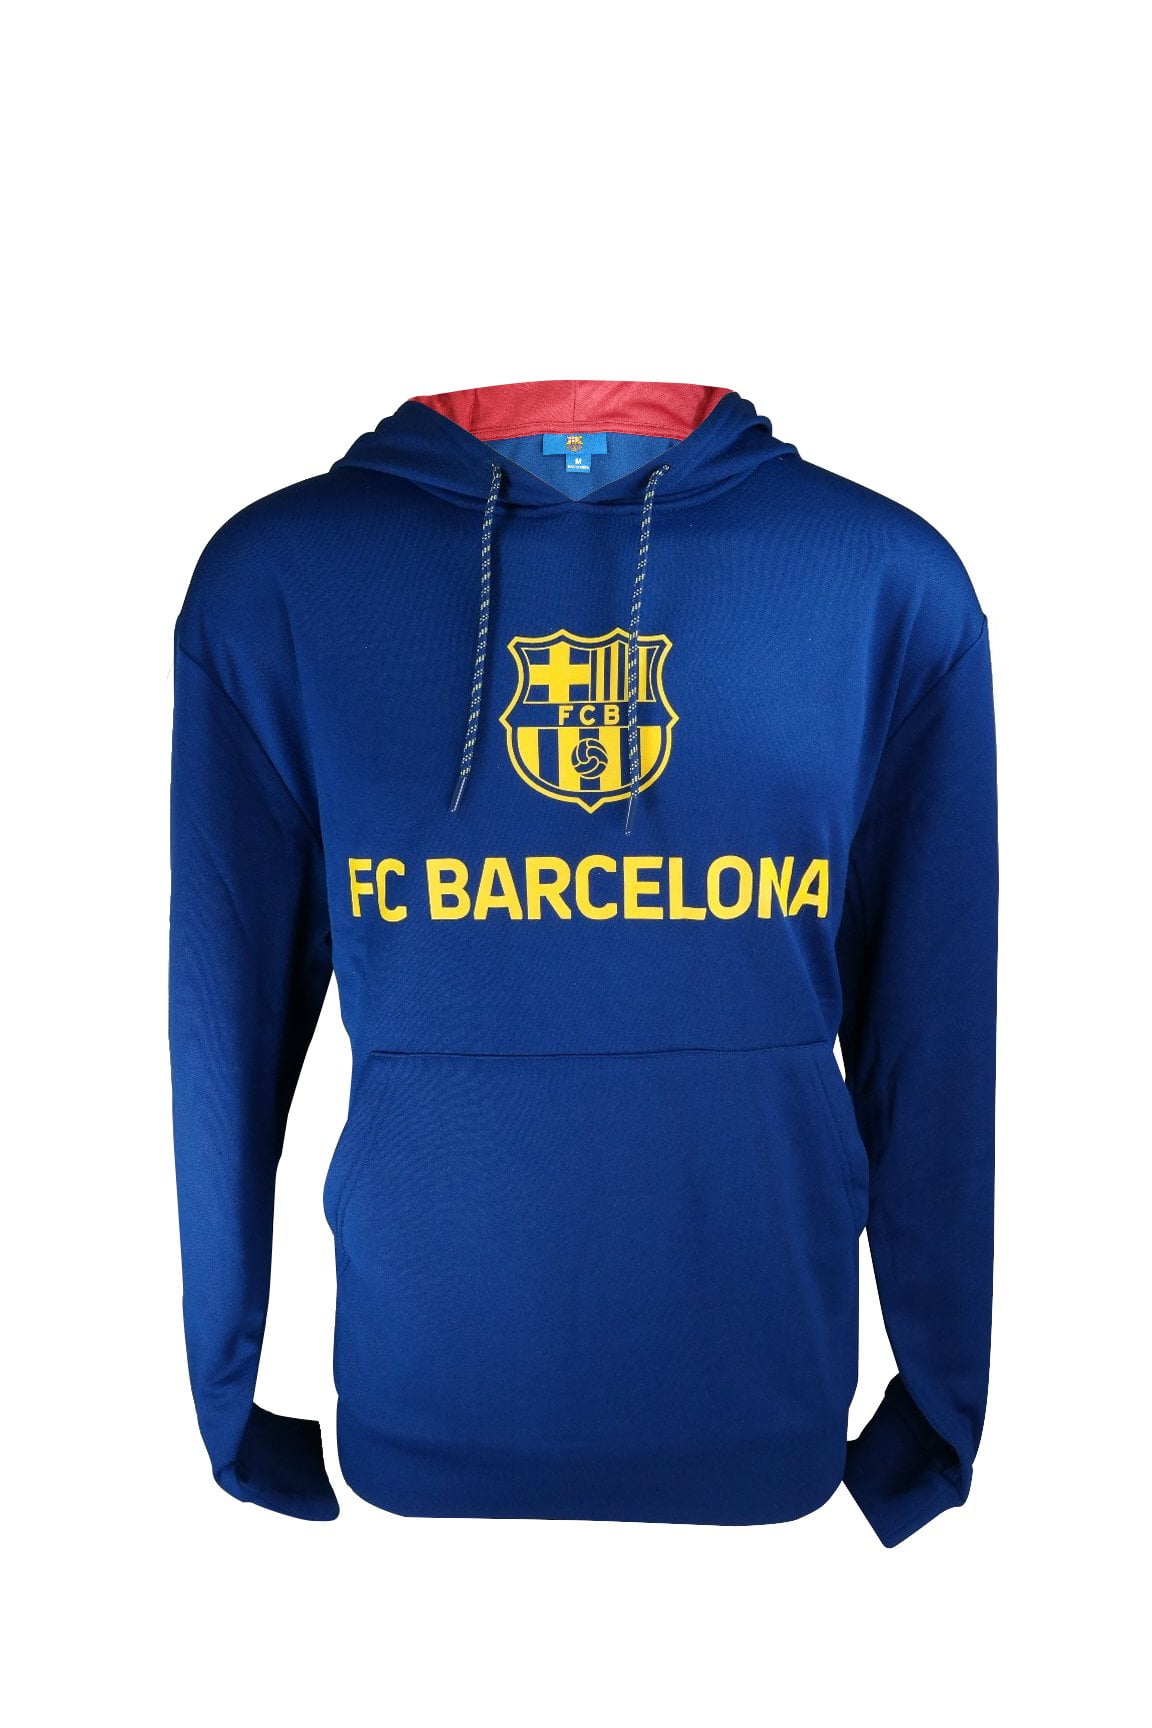 FCB LICENSED PRODUCT GIFT FC BARCELONA TEAM ESTABLISHED CLUB FOOTBALL FLAG FC 